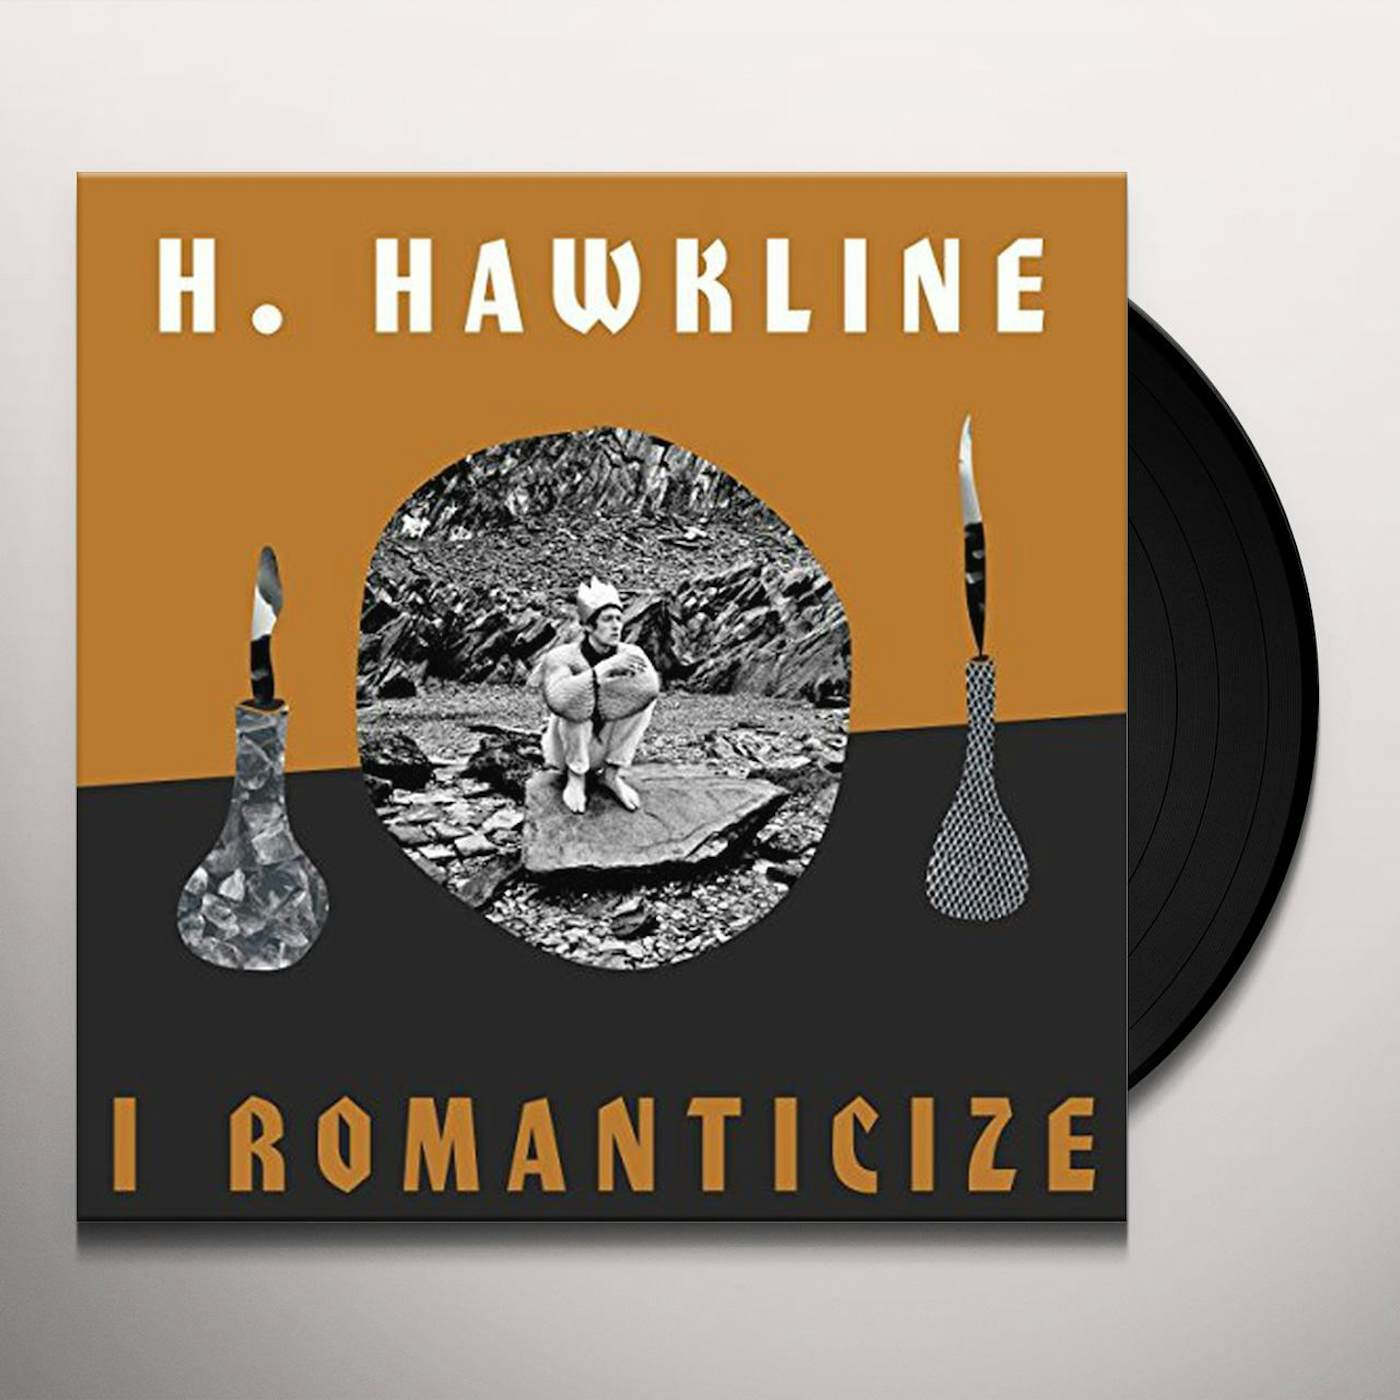 H. Hawkline I Romanticize Vinyl Record